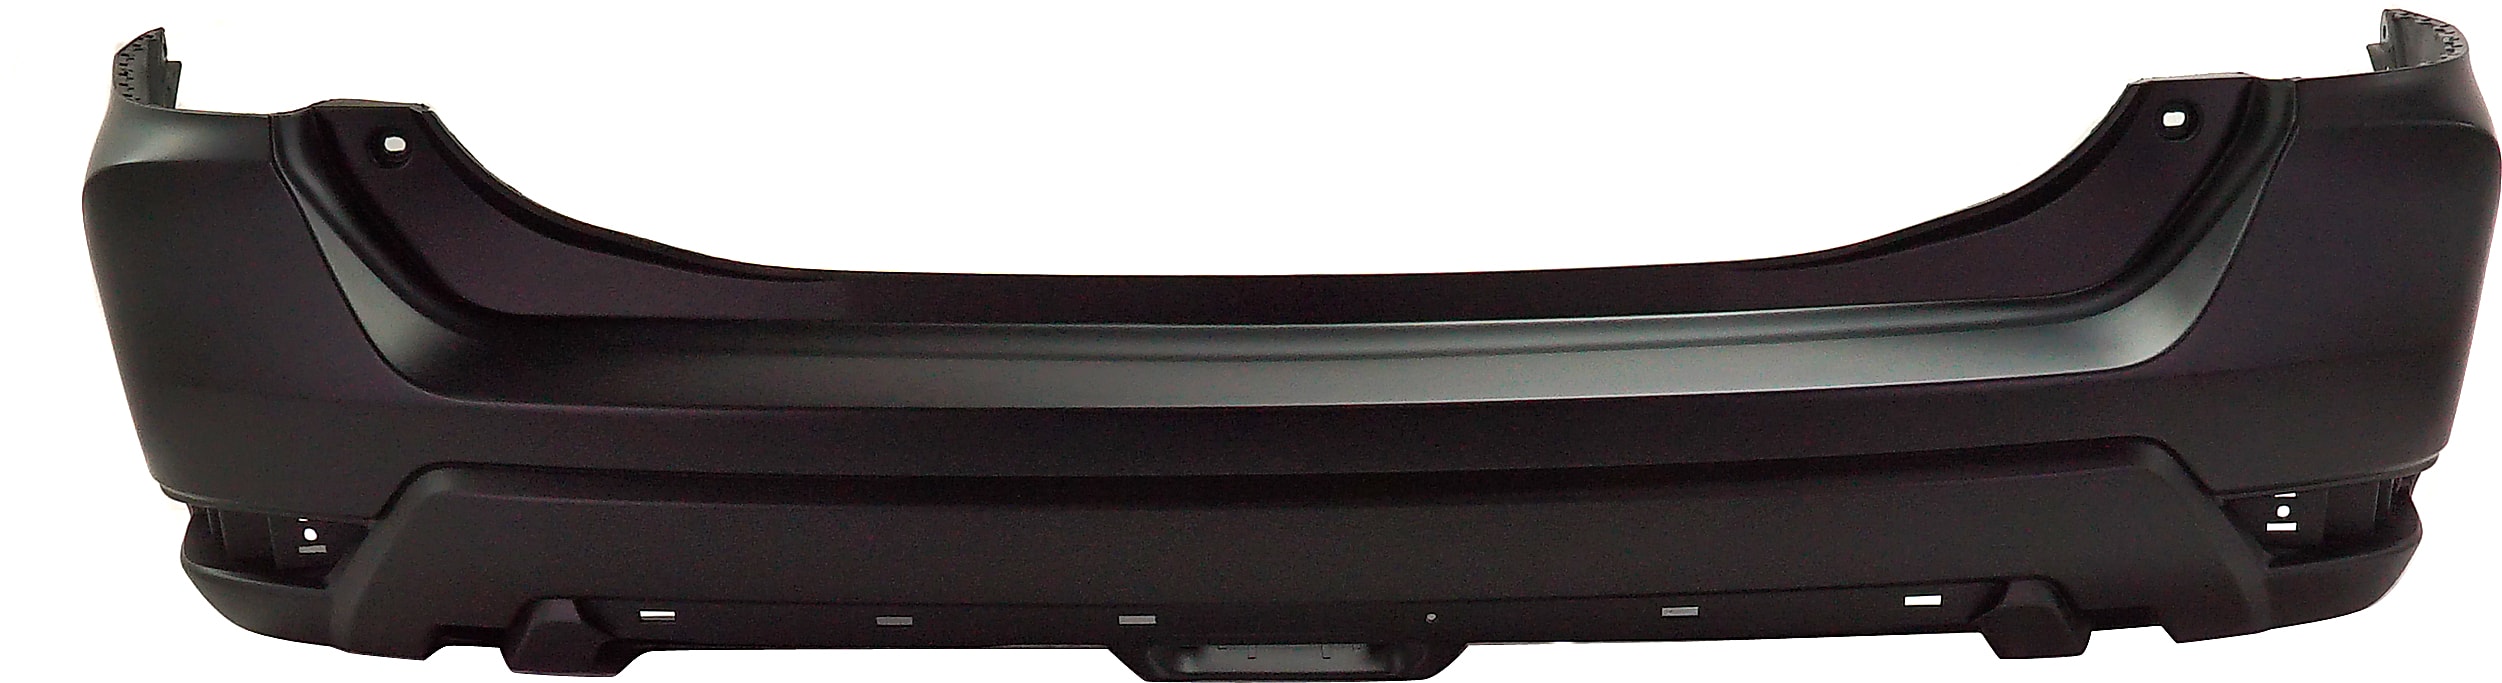 Primered Rear Bumper Cover Fits Nissan Rogue Select S/SL/SV Models NI1100260